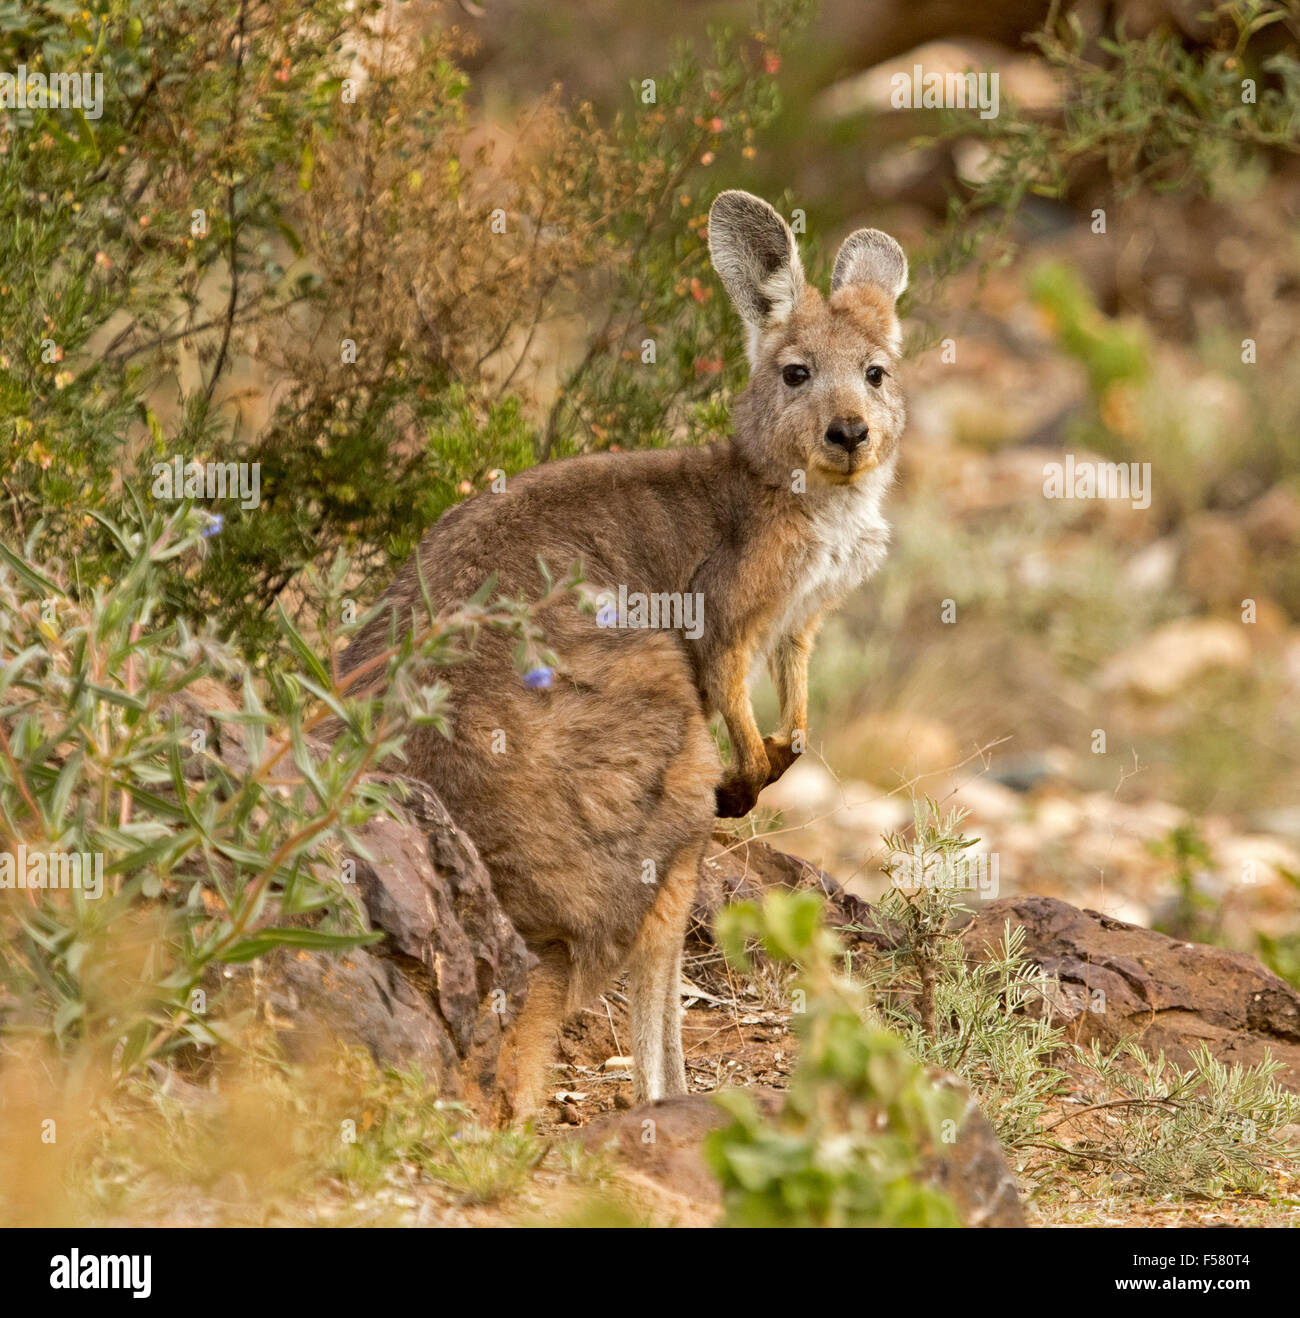 Beautiful wallaroo / euro, Macropus robustus, among green shrubs, turning to stare at camera, Flinders Ranges outback Australia Stock Photo